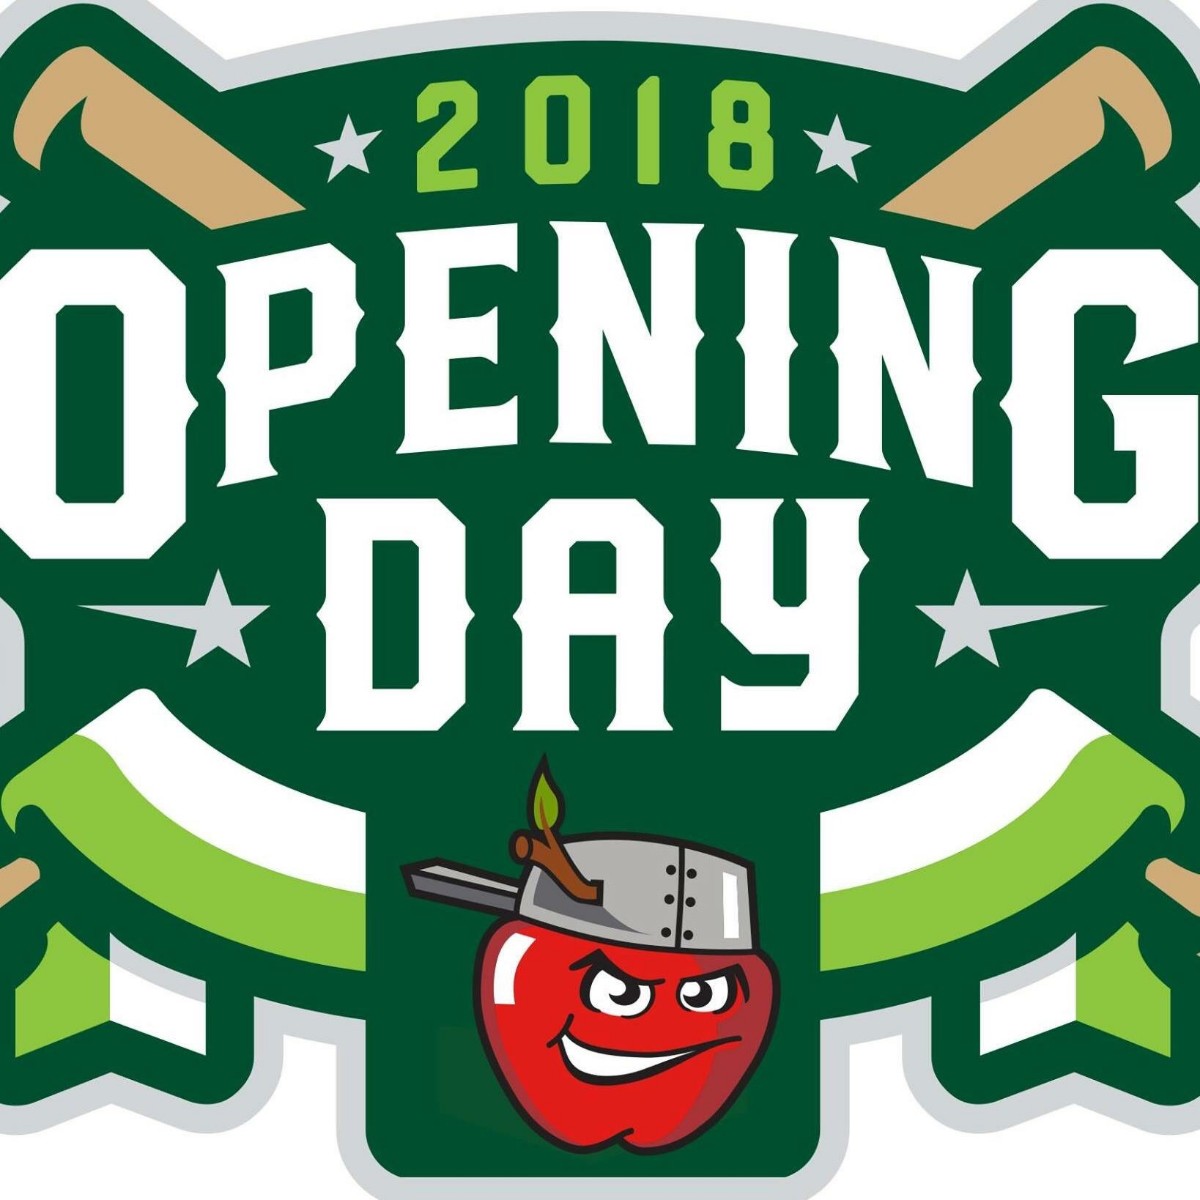 News > Opening Day! (London West Baseball)